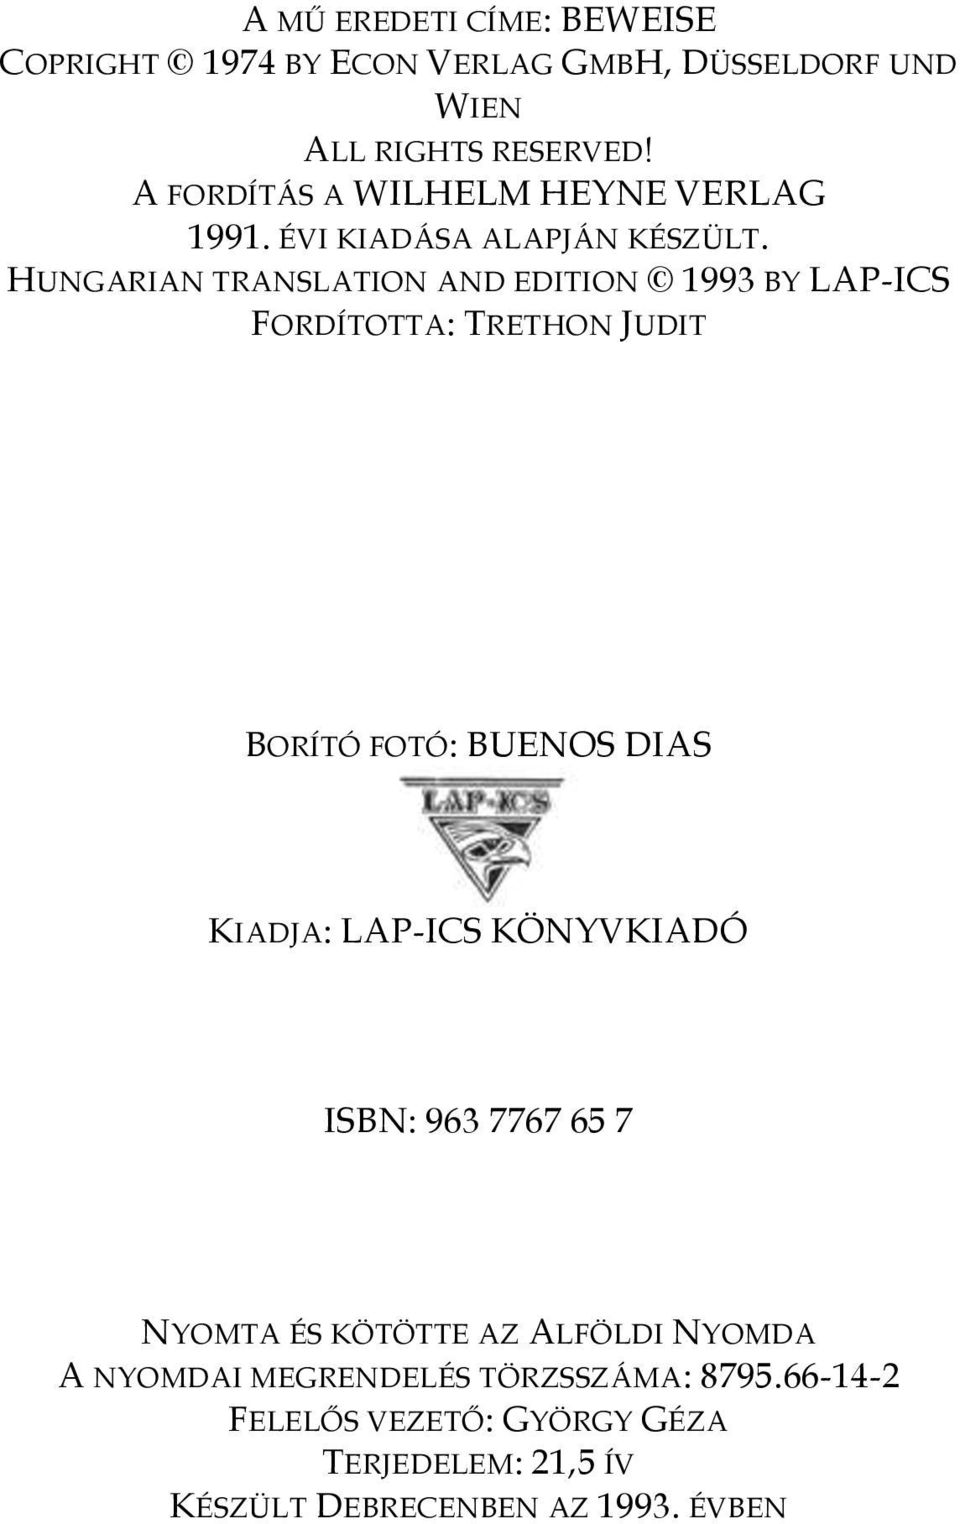 HUNGARIAN TRANSLATION AND EDITION 1993 BY LAP-ICS FORDÍTOTTA: TRETHON JUDIT BORÍTÓ FOTÓ: BUENOS DIAS KIADJA: LAP-ICS